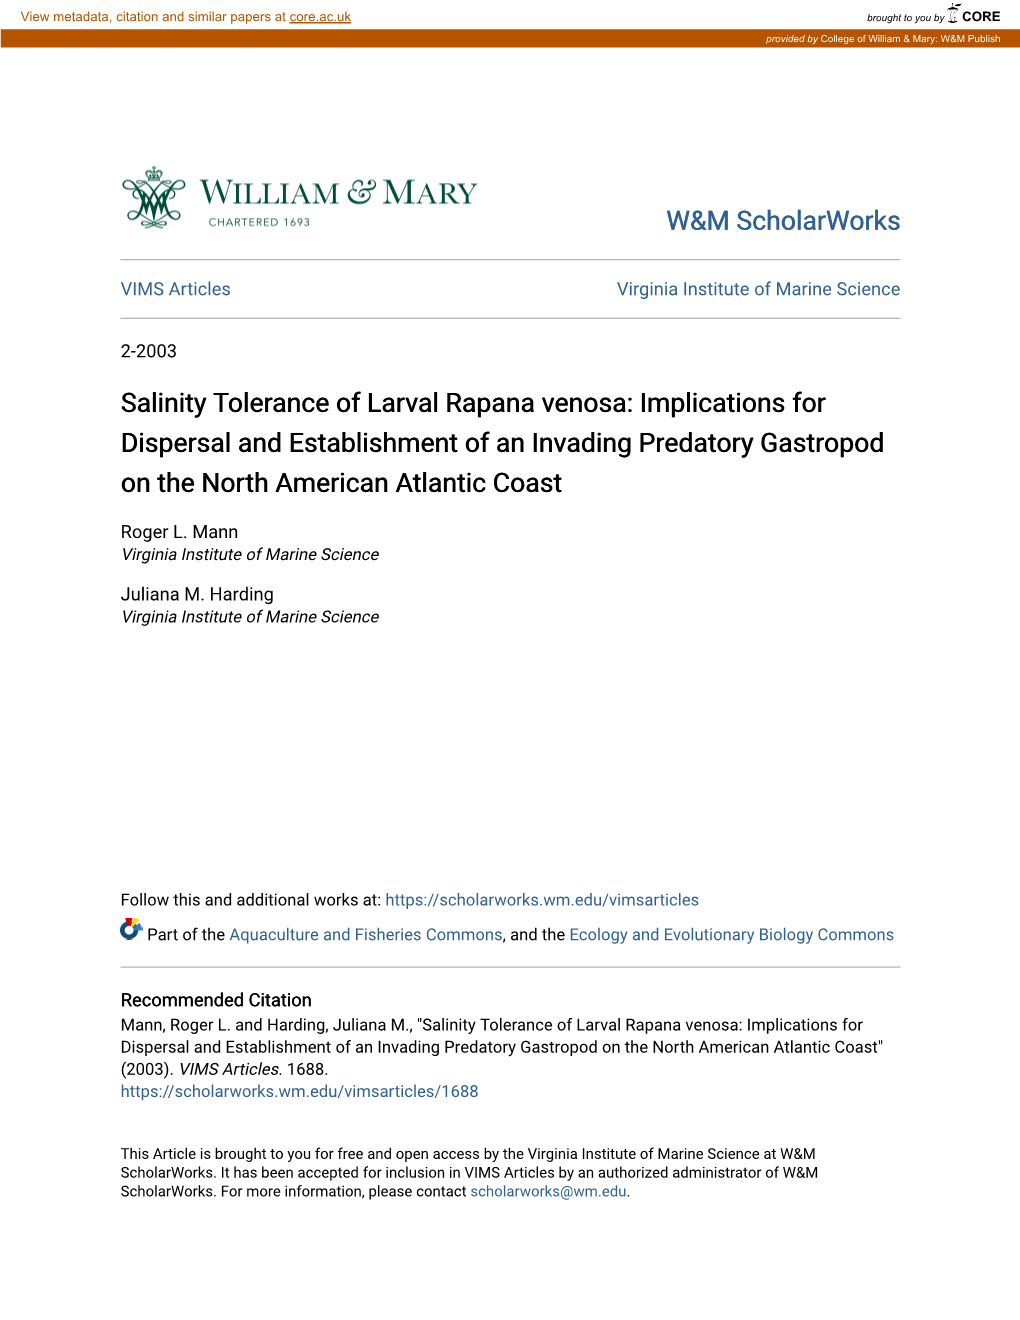 Salinity Tolerance of Larval Rapana Venosa: Implications for Dispersal and Establishment of an Invading Predatory Gastropod on the North American Atlantic Coast